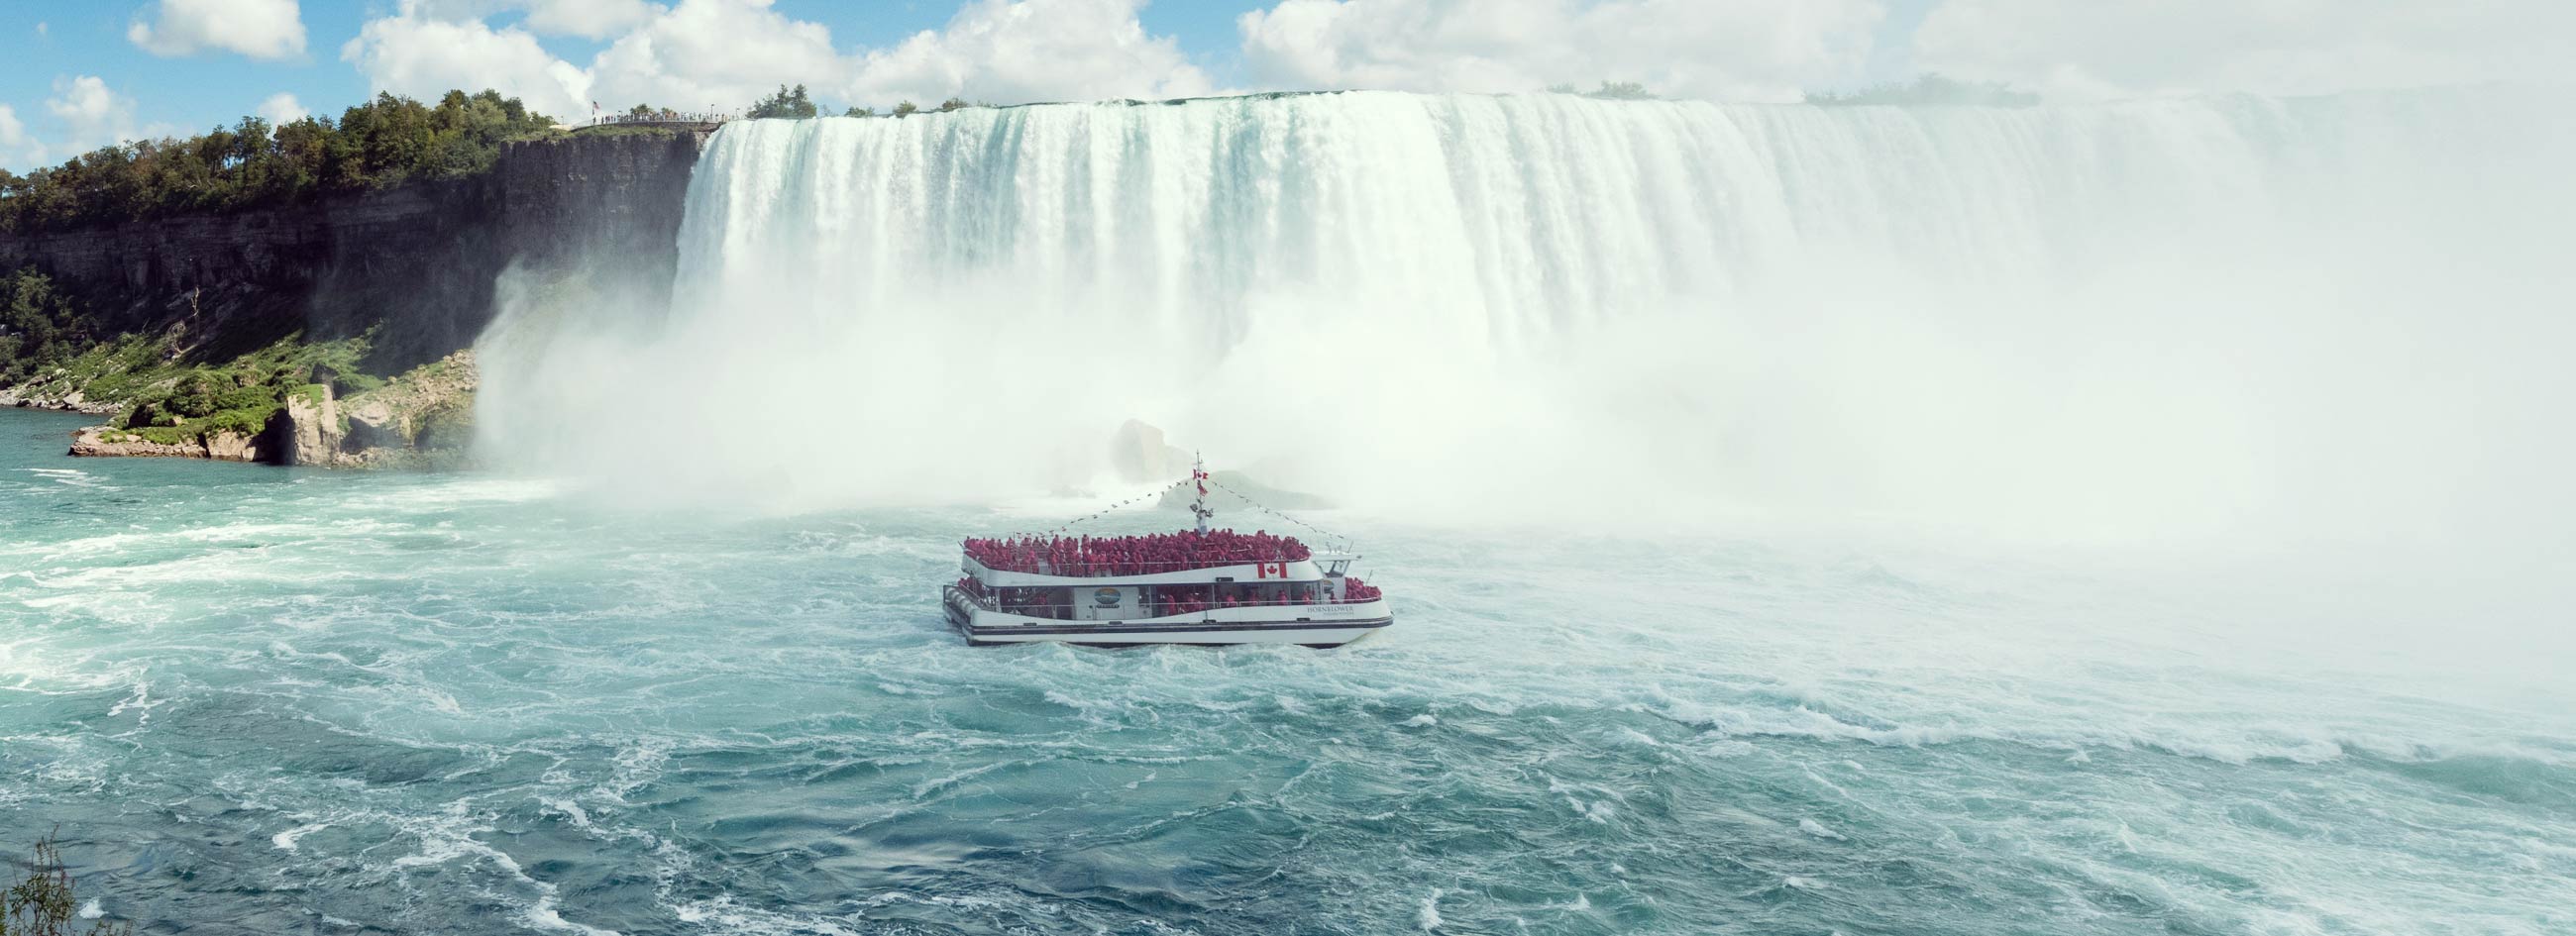 Niagara Falls Adventure Pass Save up to 48 off top Niagara attractions